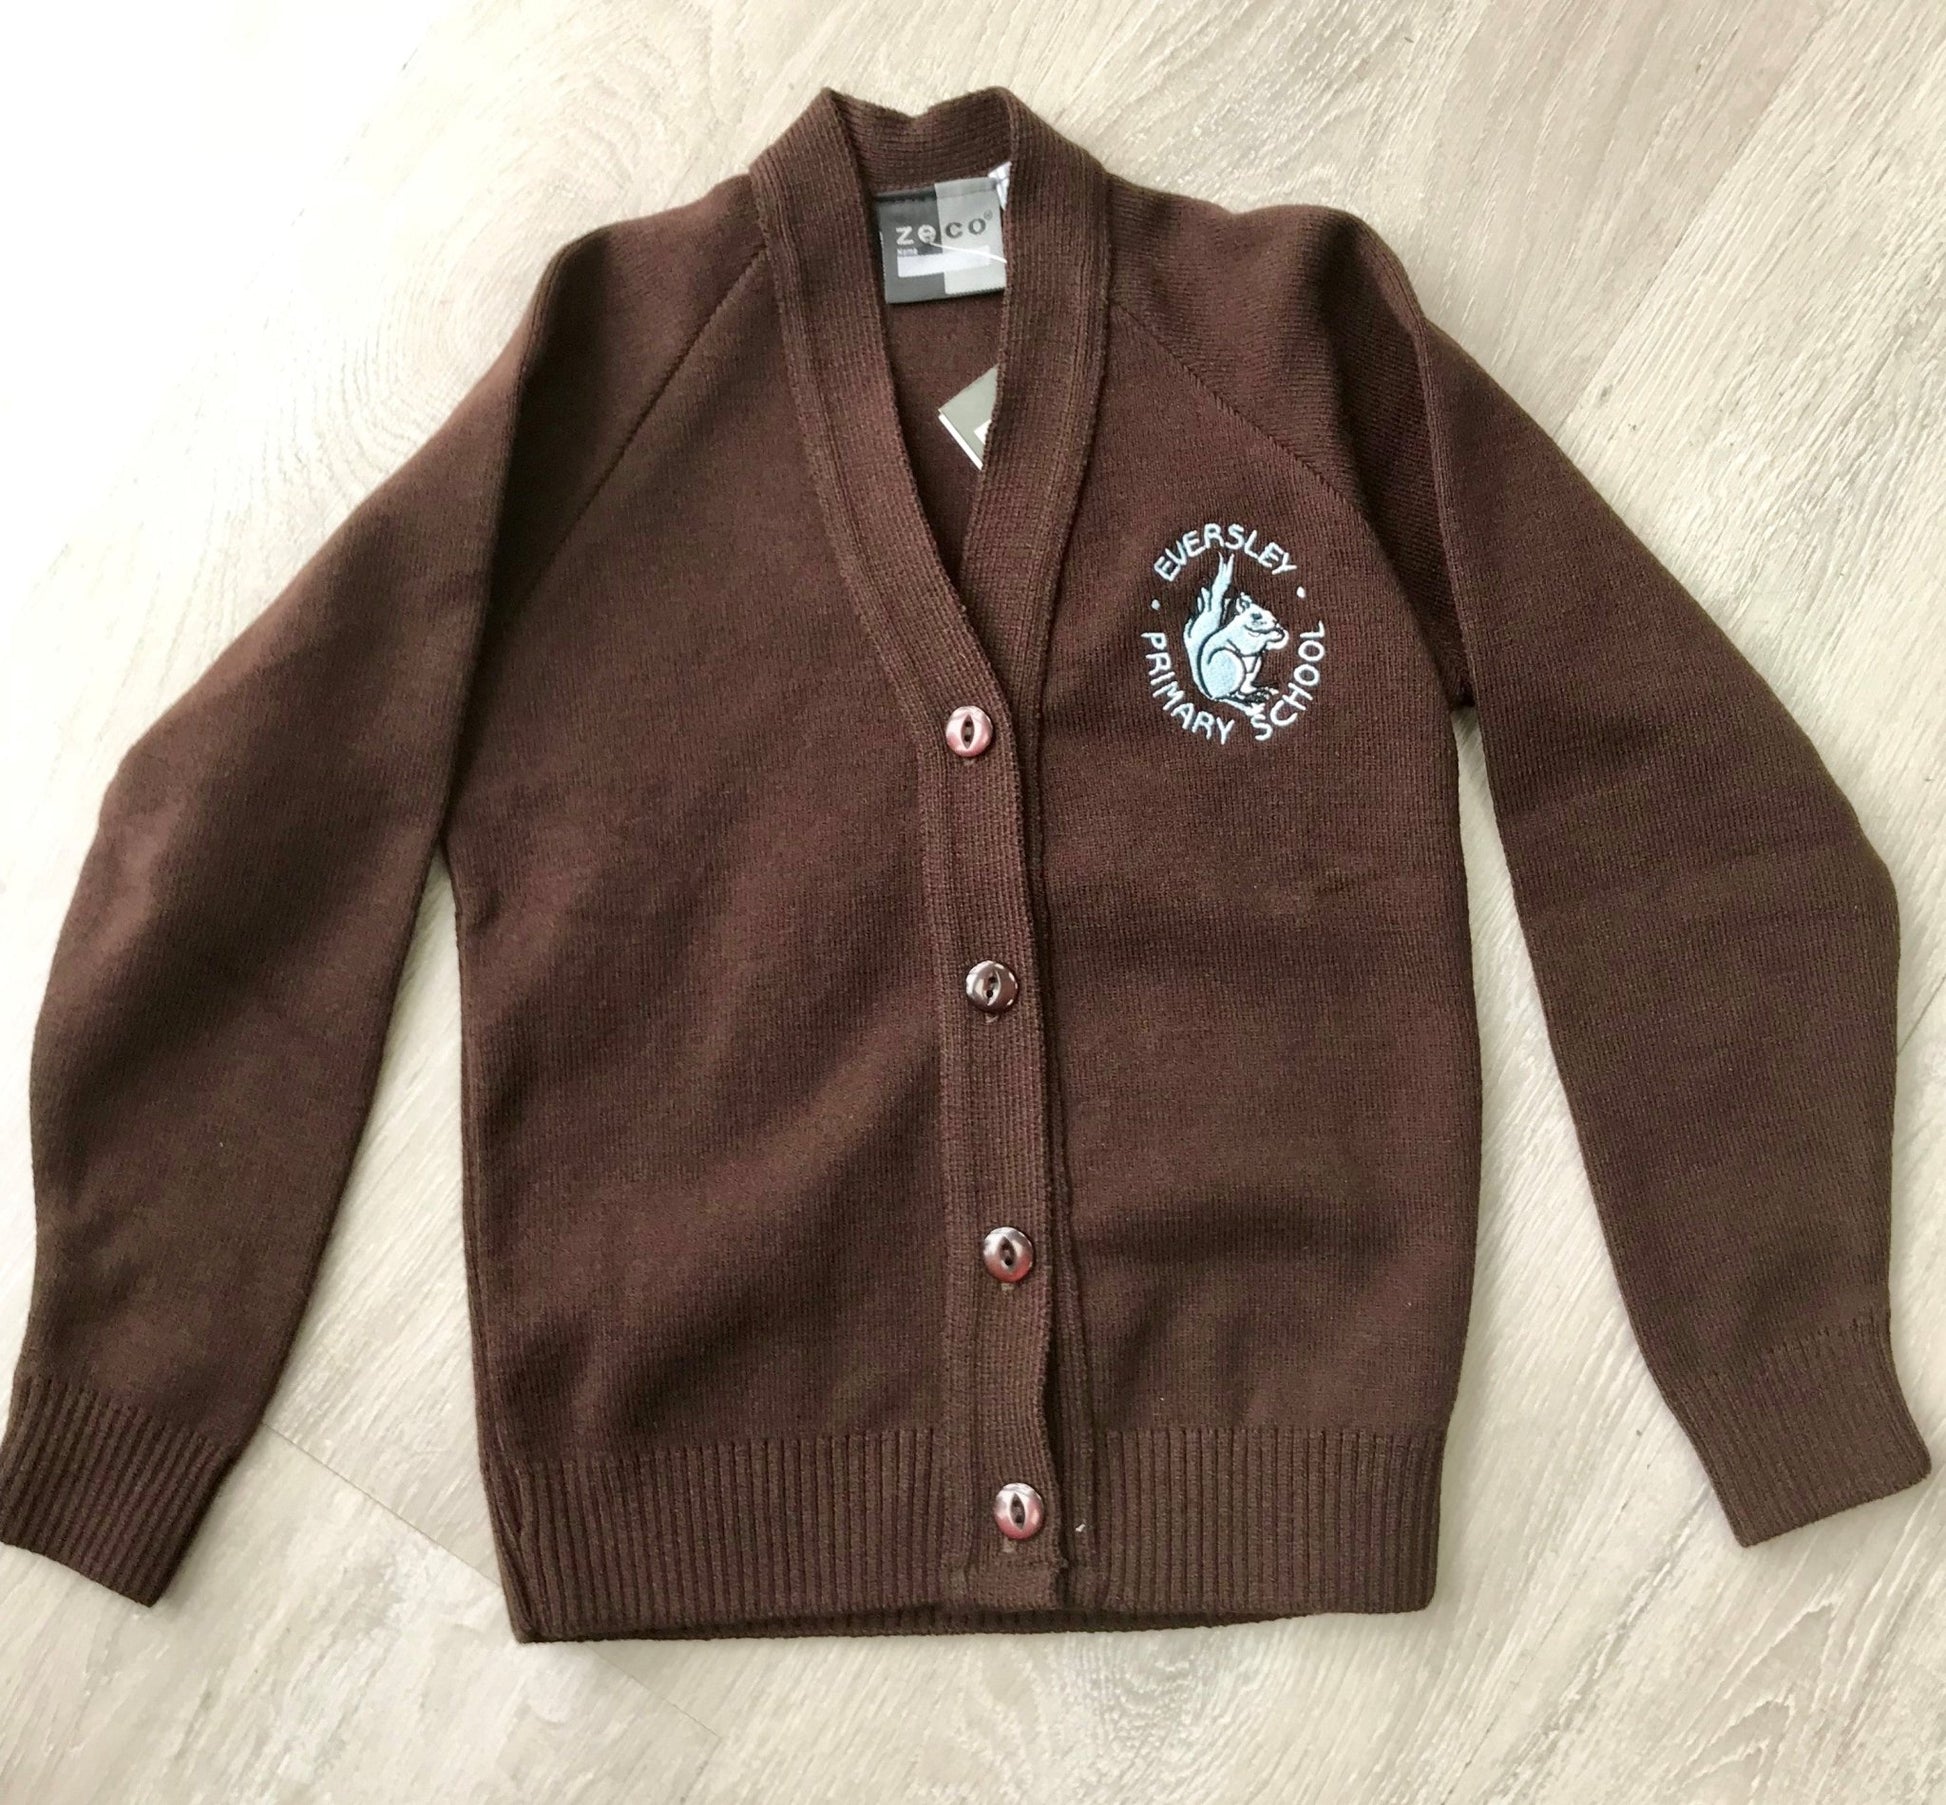 Eversley Primary School Knitted Cardigan - Uniformwise Schoolwear